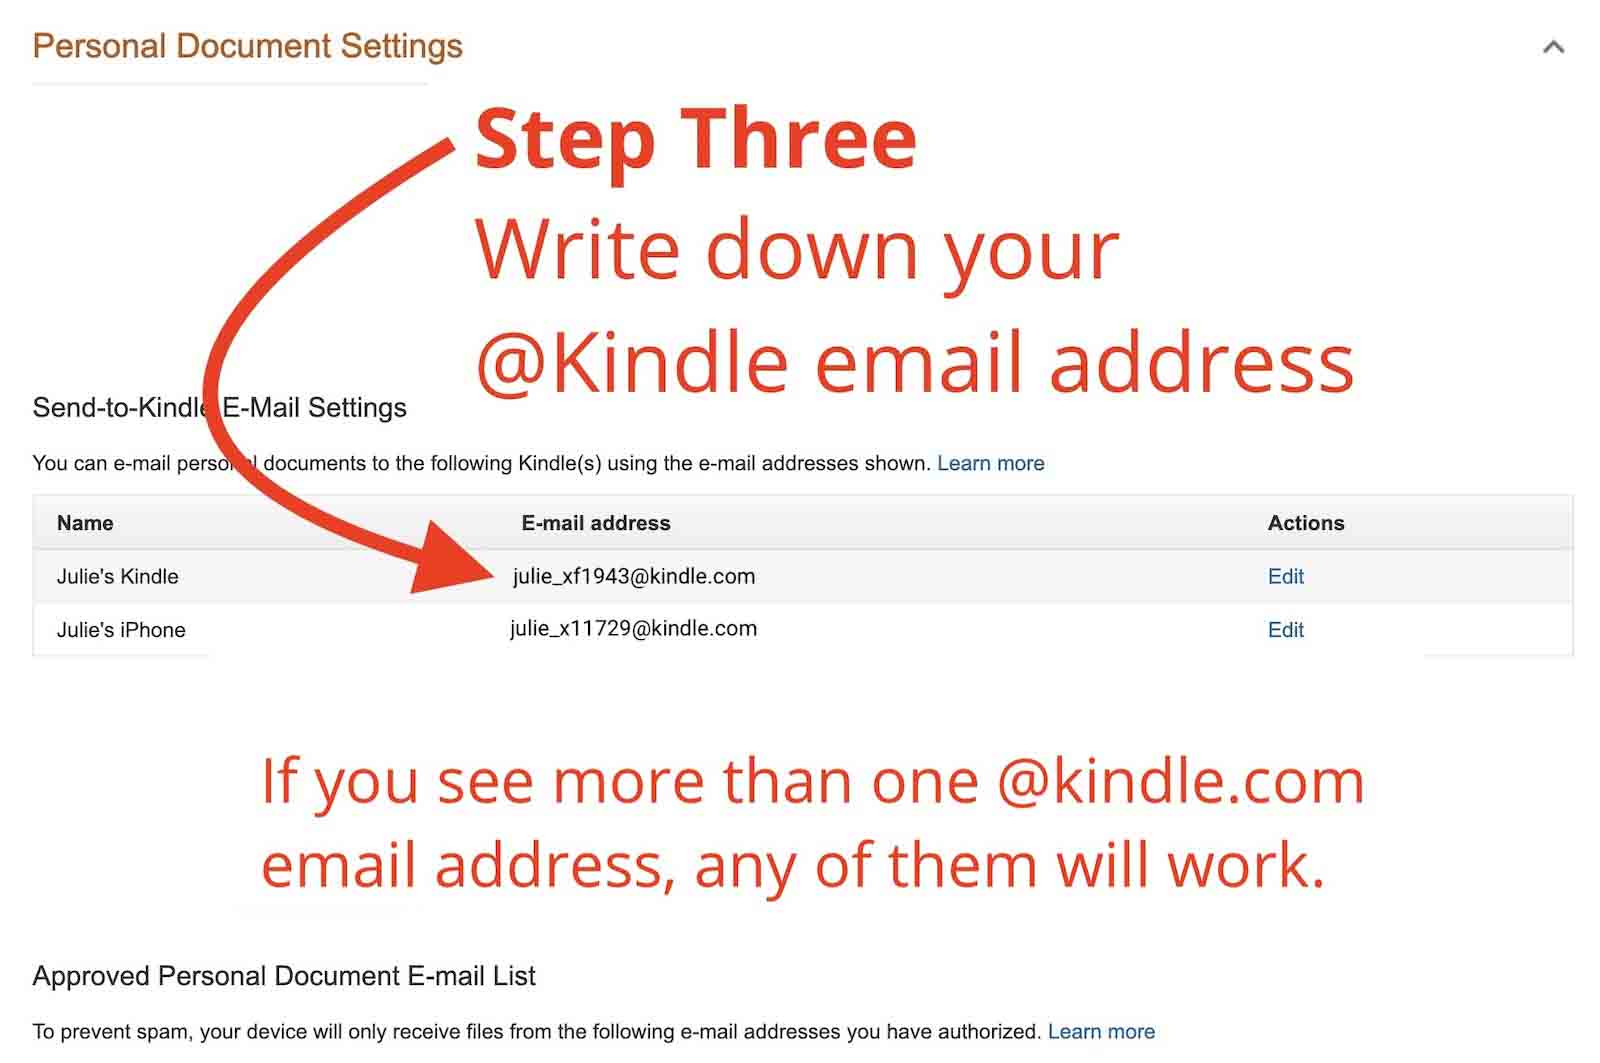 Screenshot Amazon Personal Document Settings with arrow indicating @kindle.com address